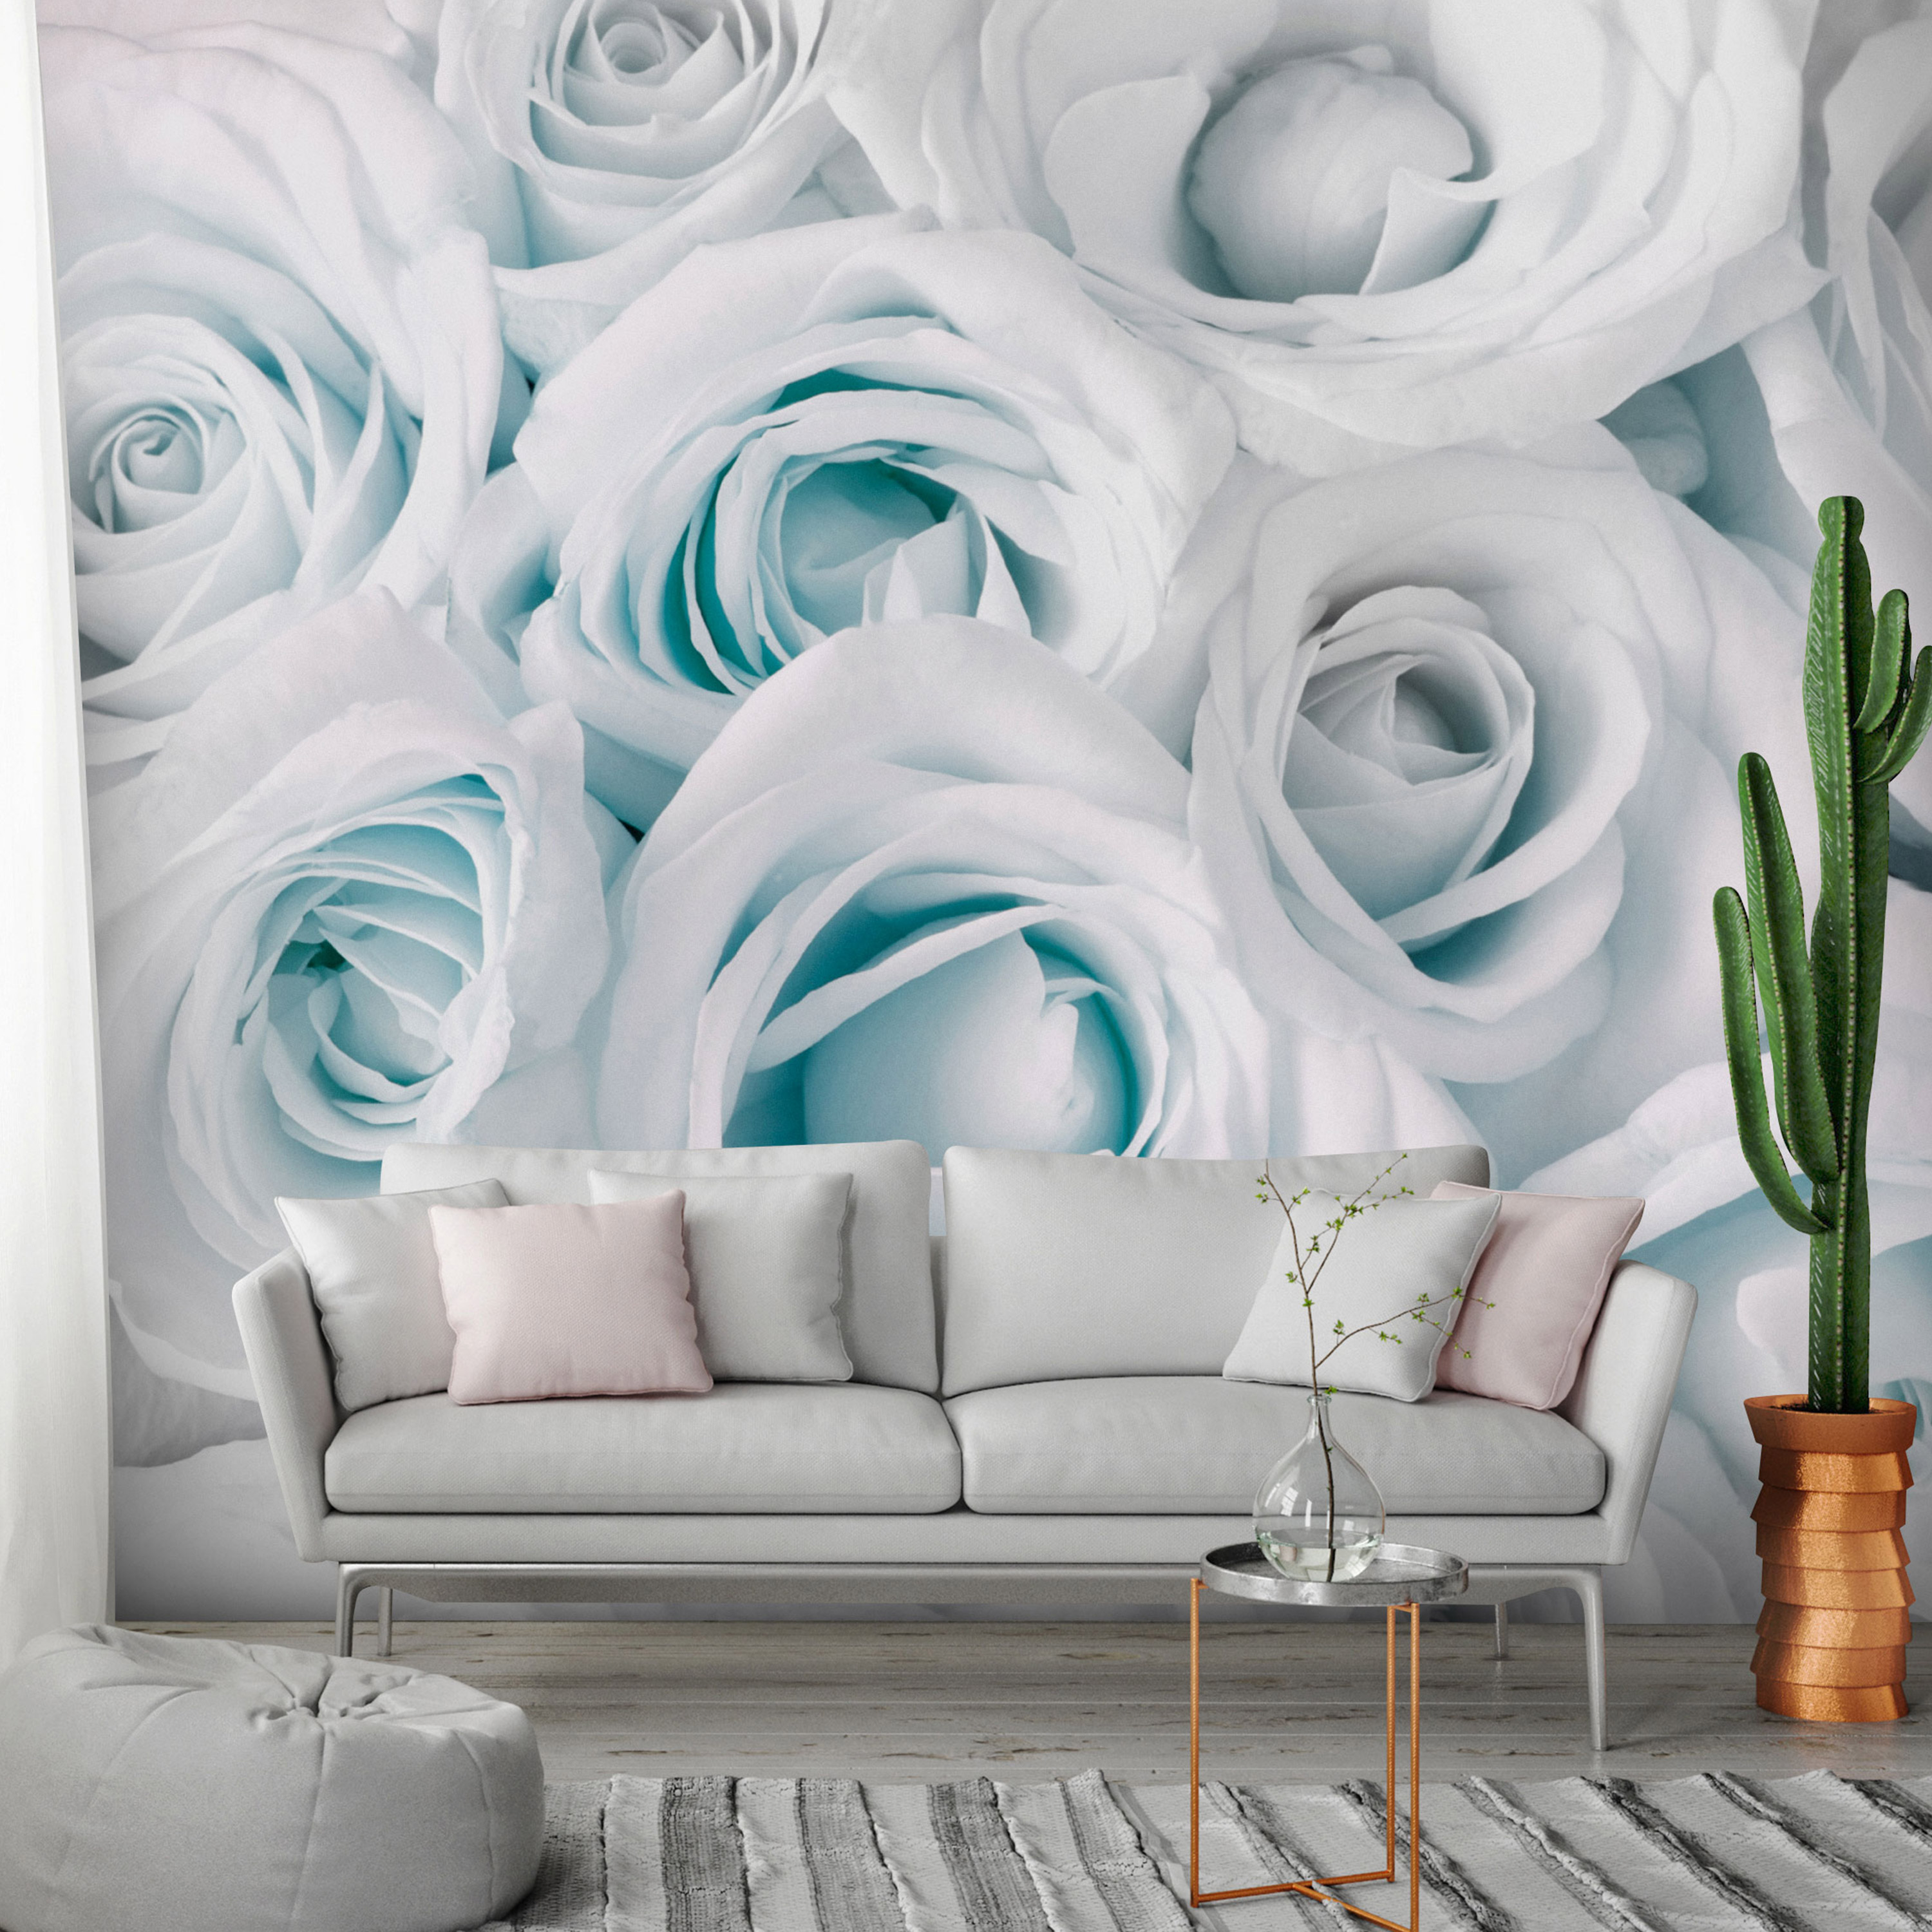 Self-adhesive Wallpaper - Satin Rose (Turquoise) - 147x105